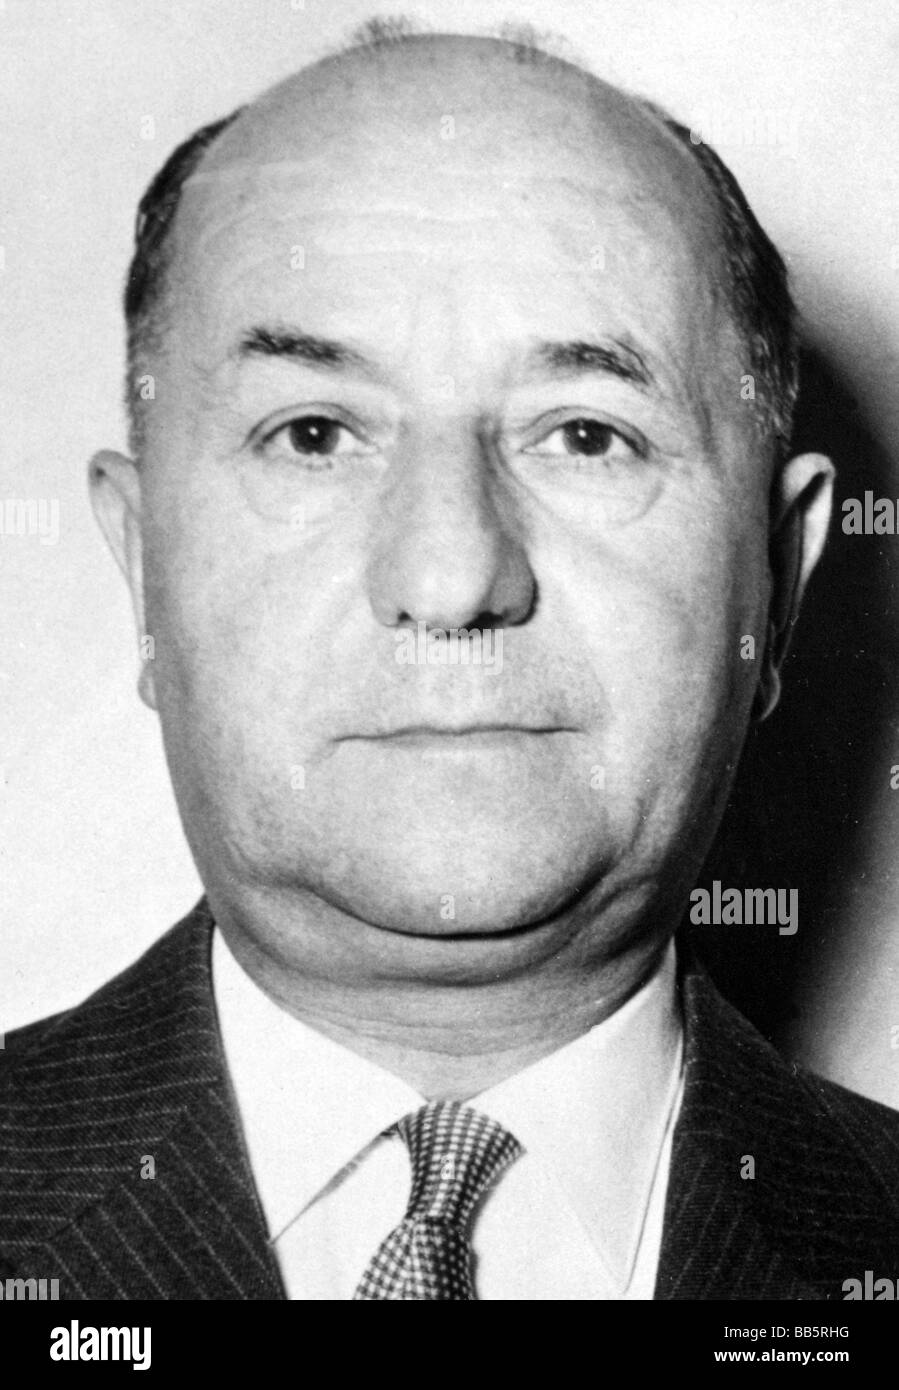 Seidel, Hanns, 12.10.1901 - 5.8.1961, German politician (CSU), Prime Minister of Bavaria 16.10.1957 - 22.1.1960, portrait, 1957, , Stock Photo